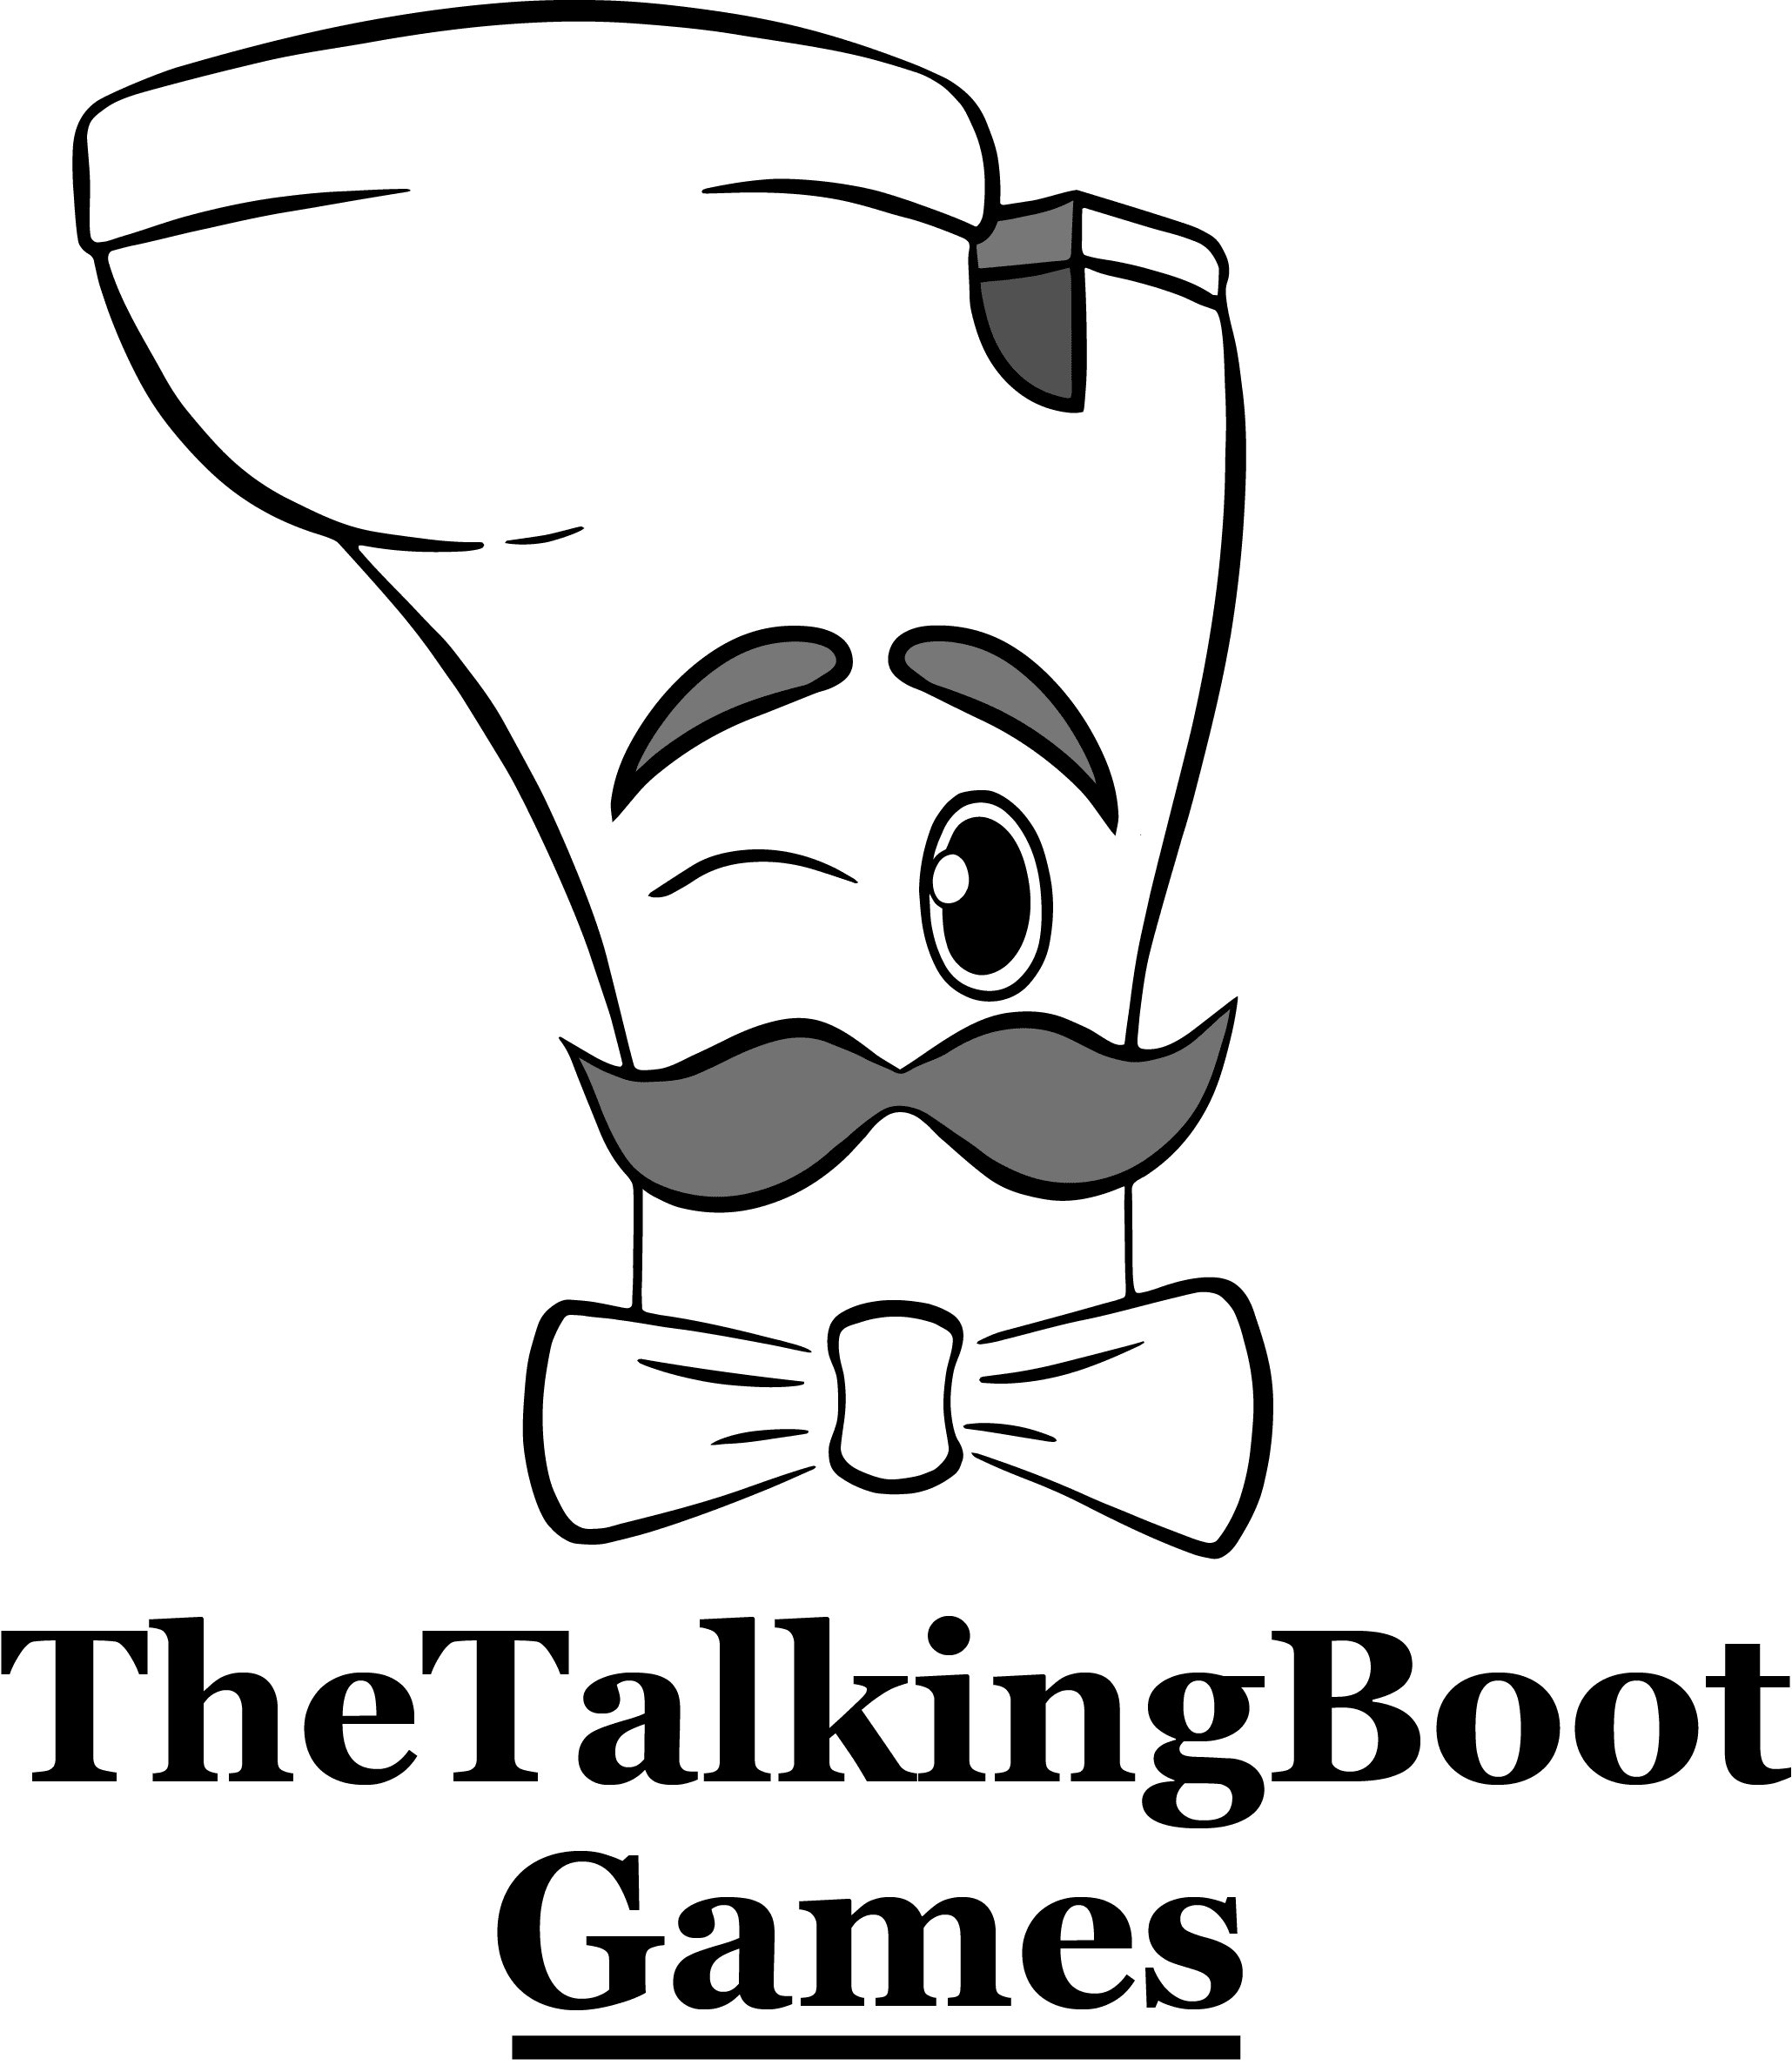 incubateur The Talking Boot Games Plaine Images